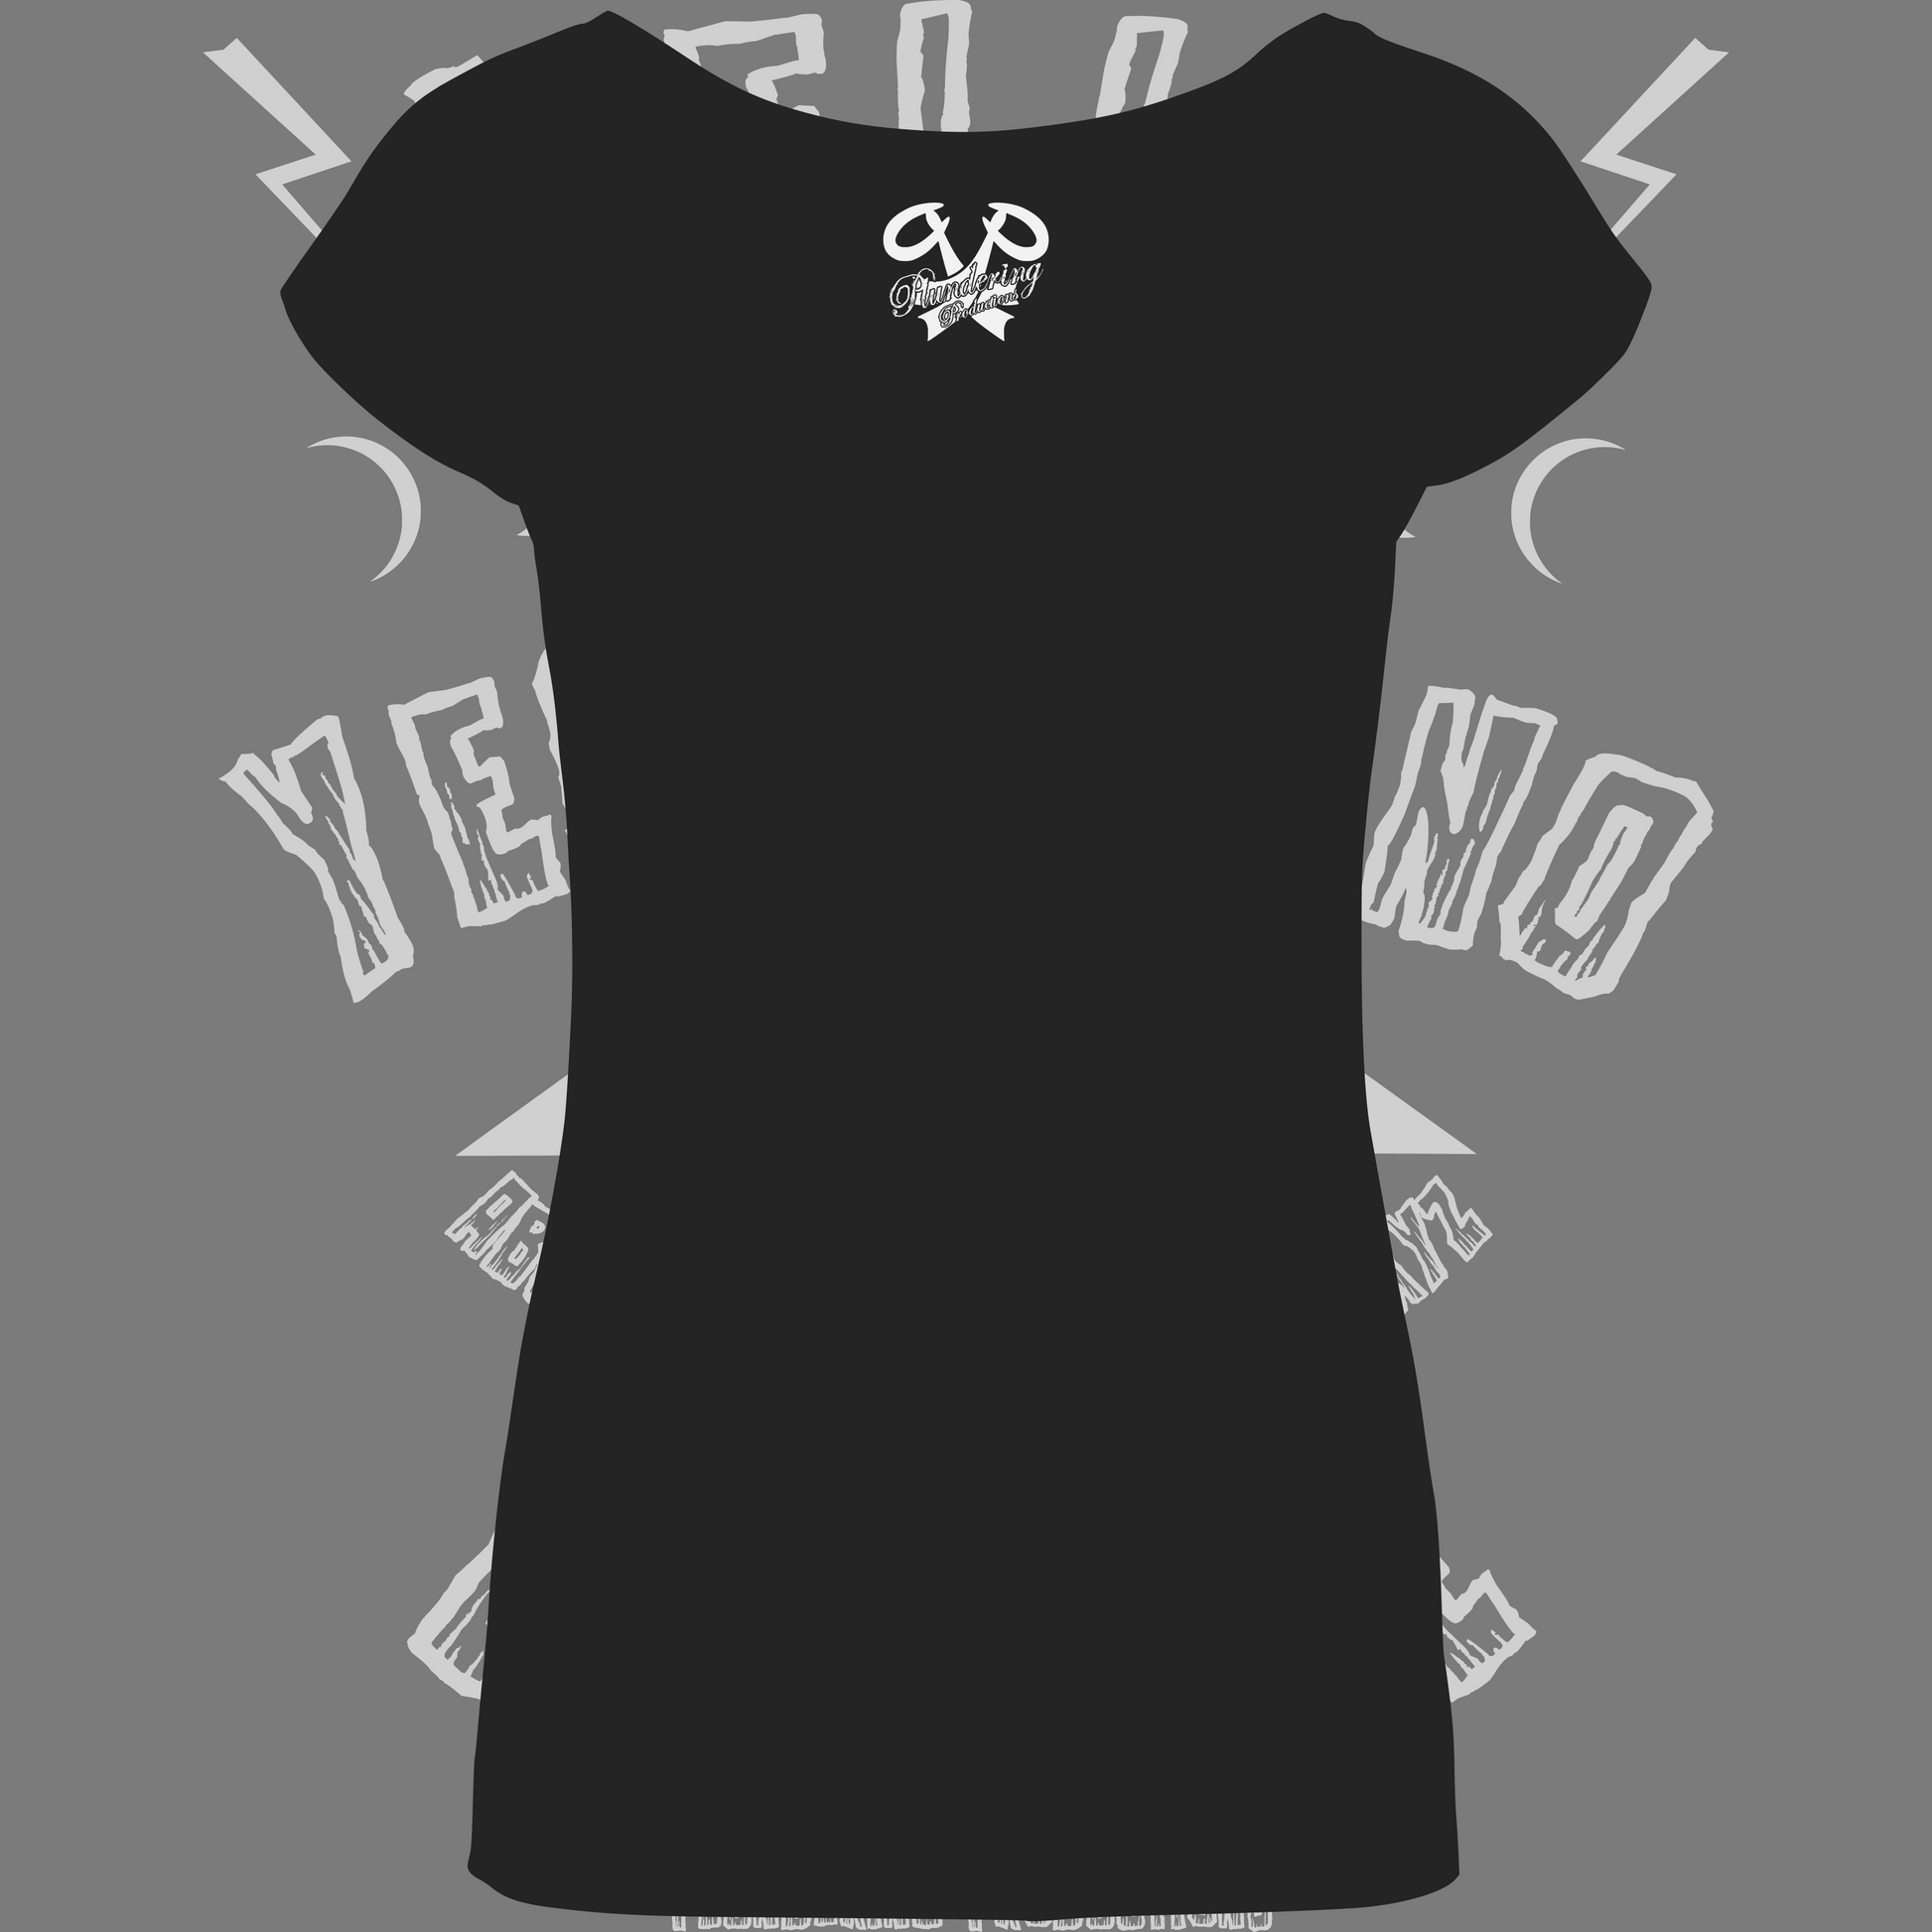 Women's T-shirt in black 9 sizes